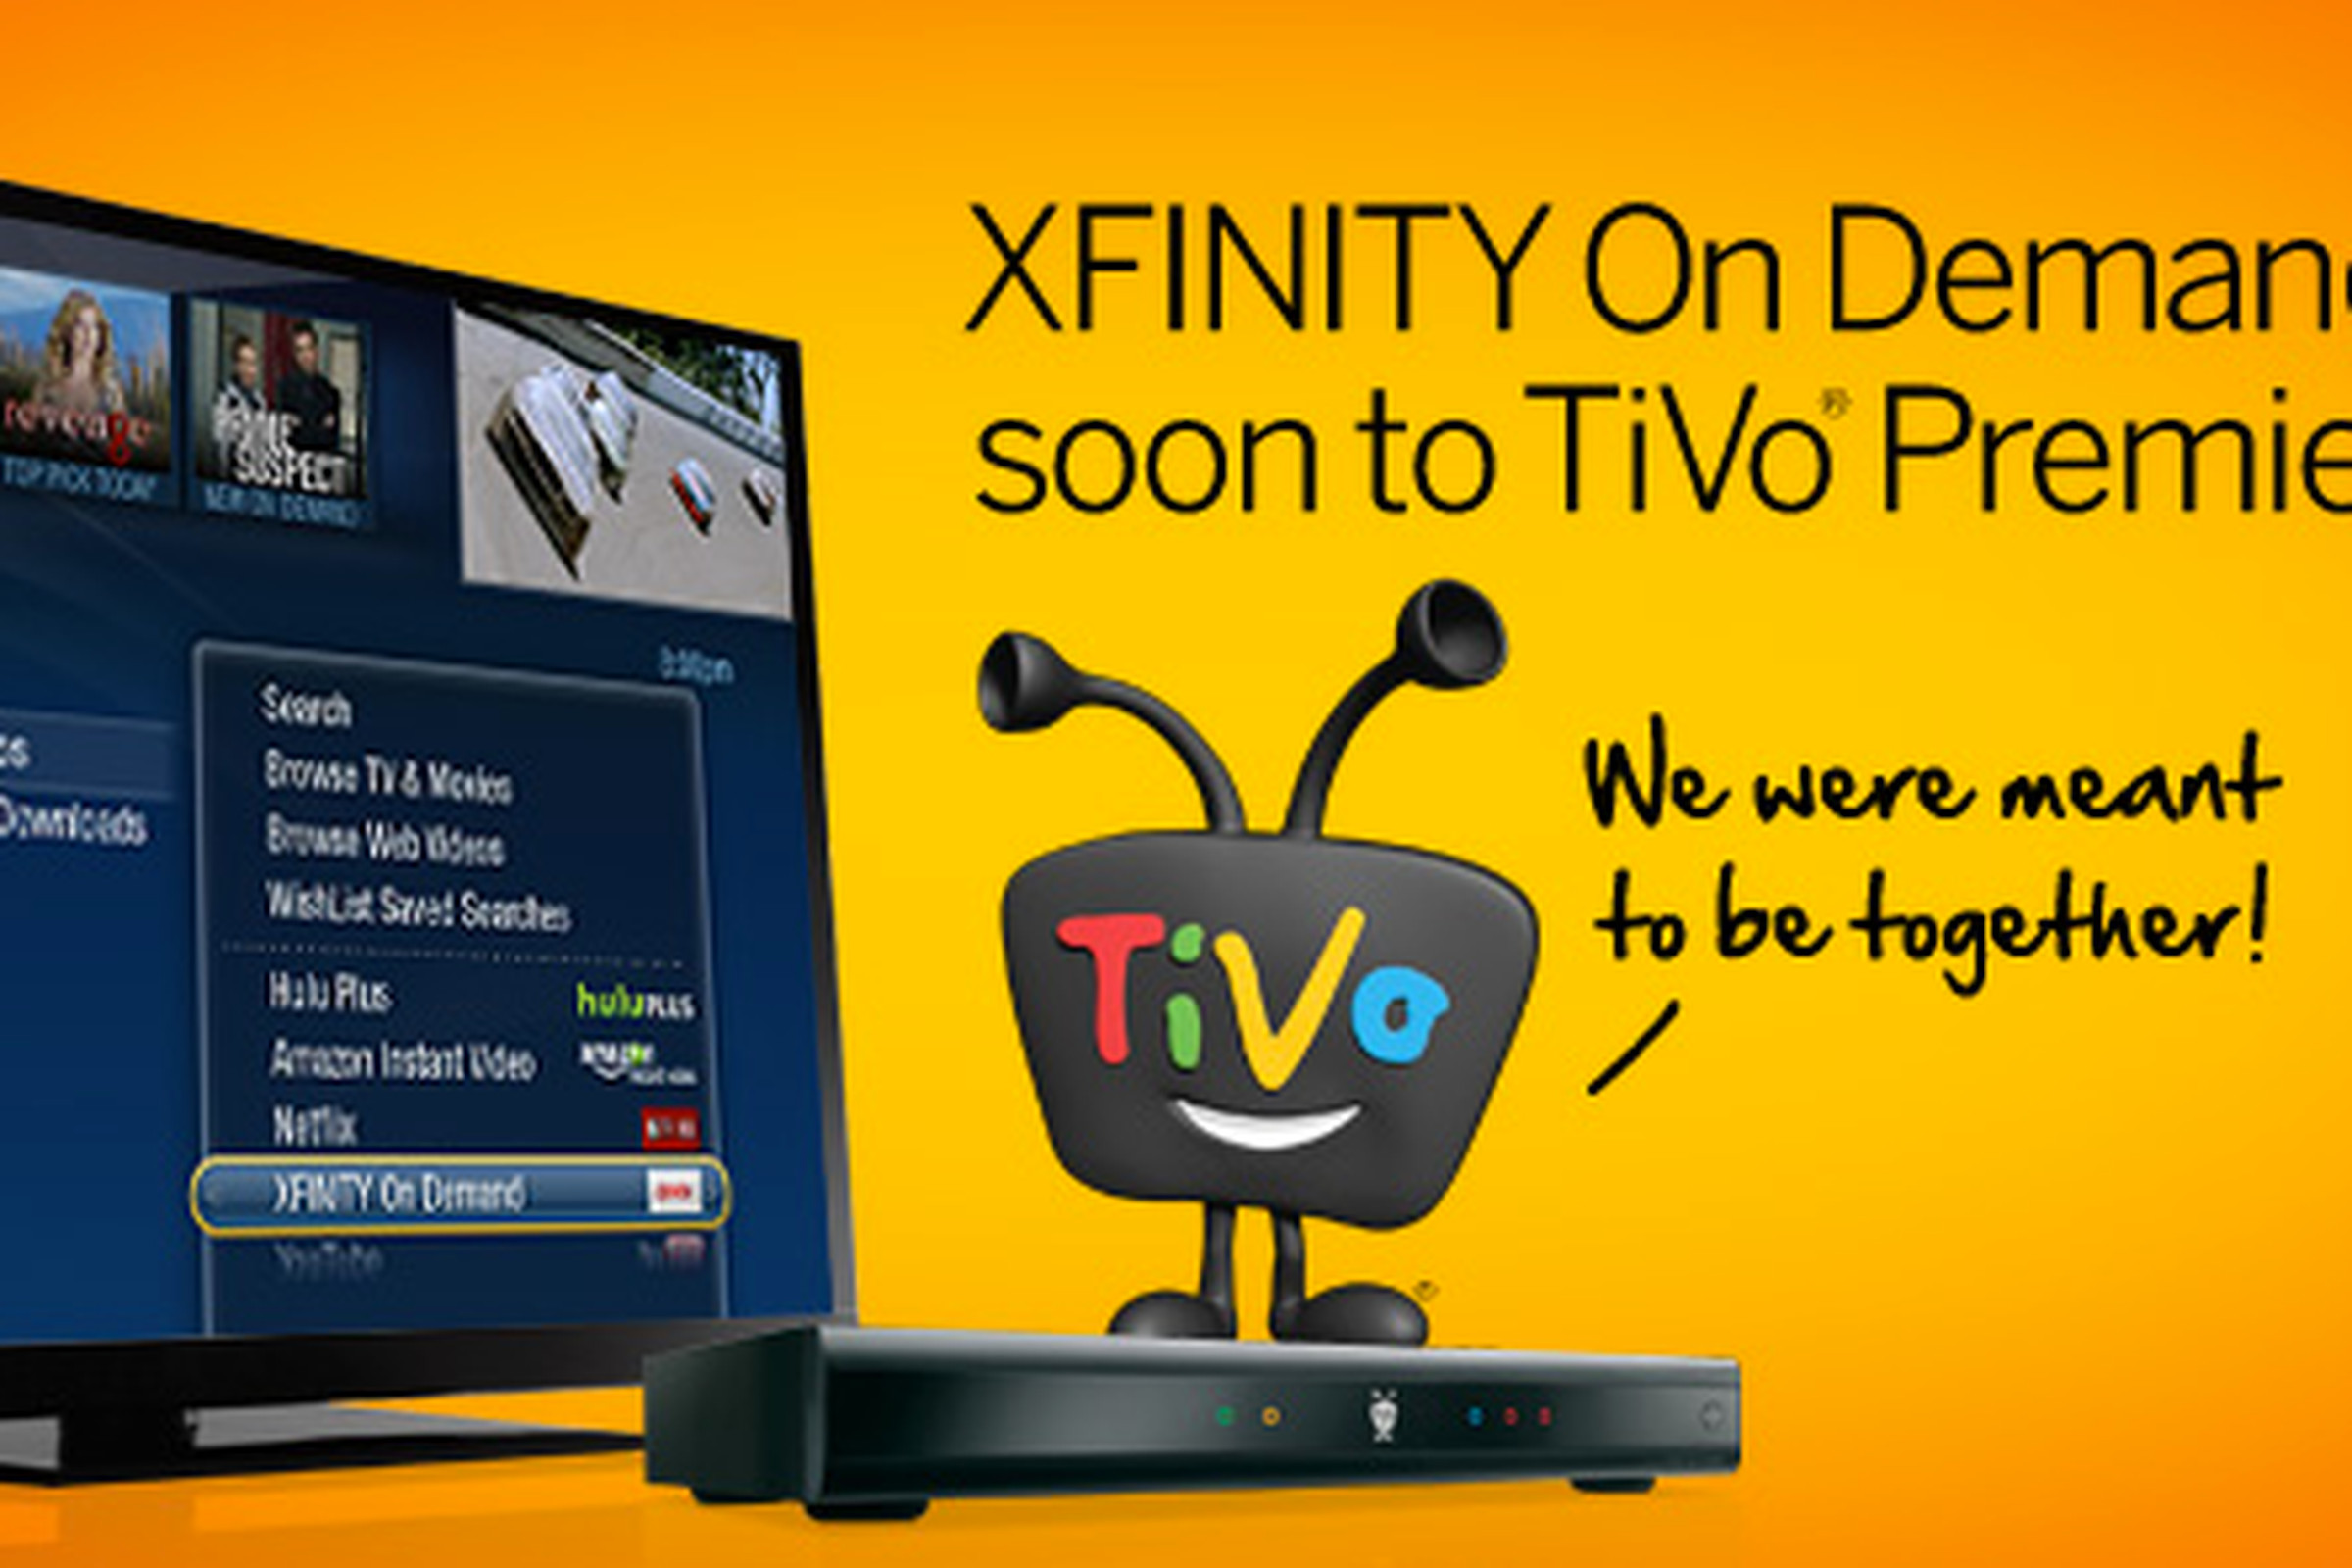 TiVO Xfinity On Demand